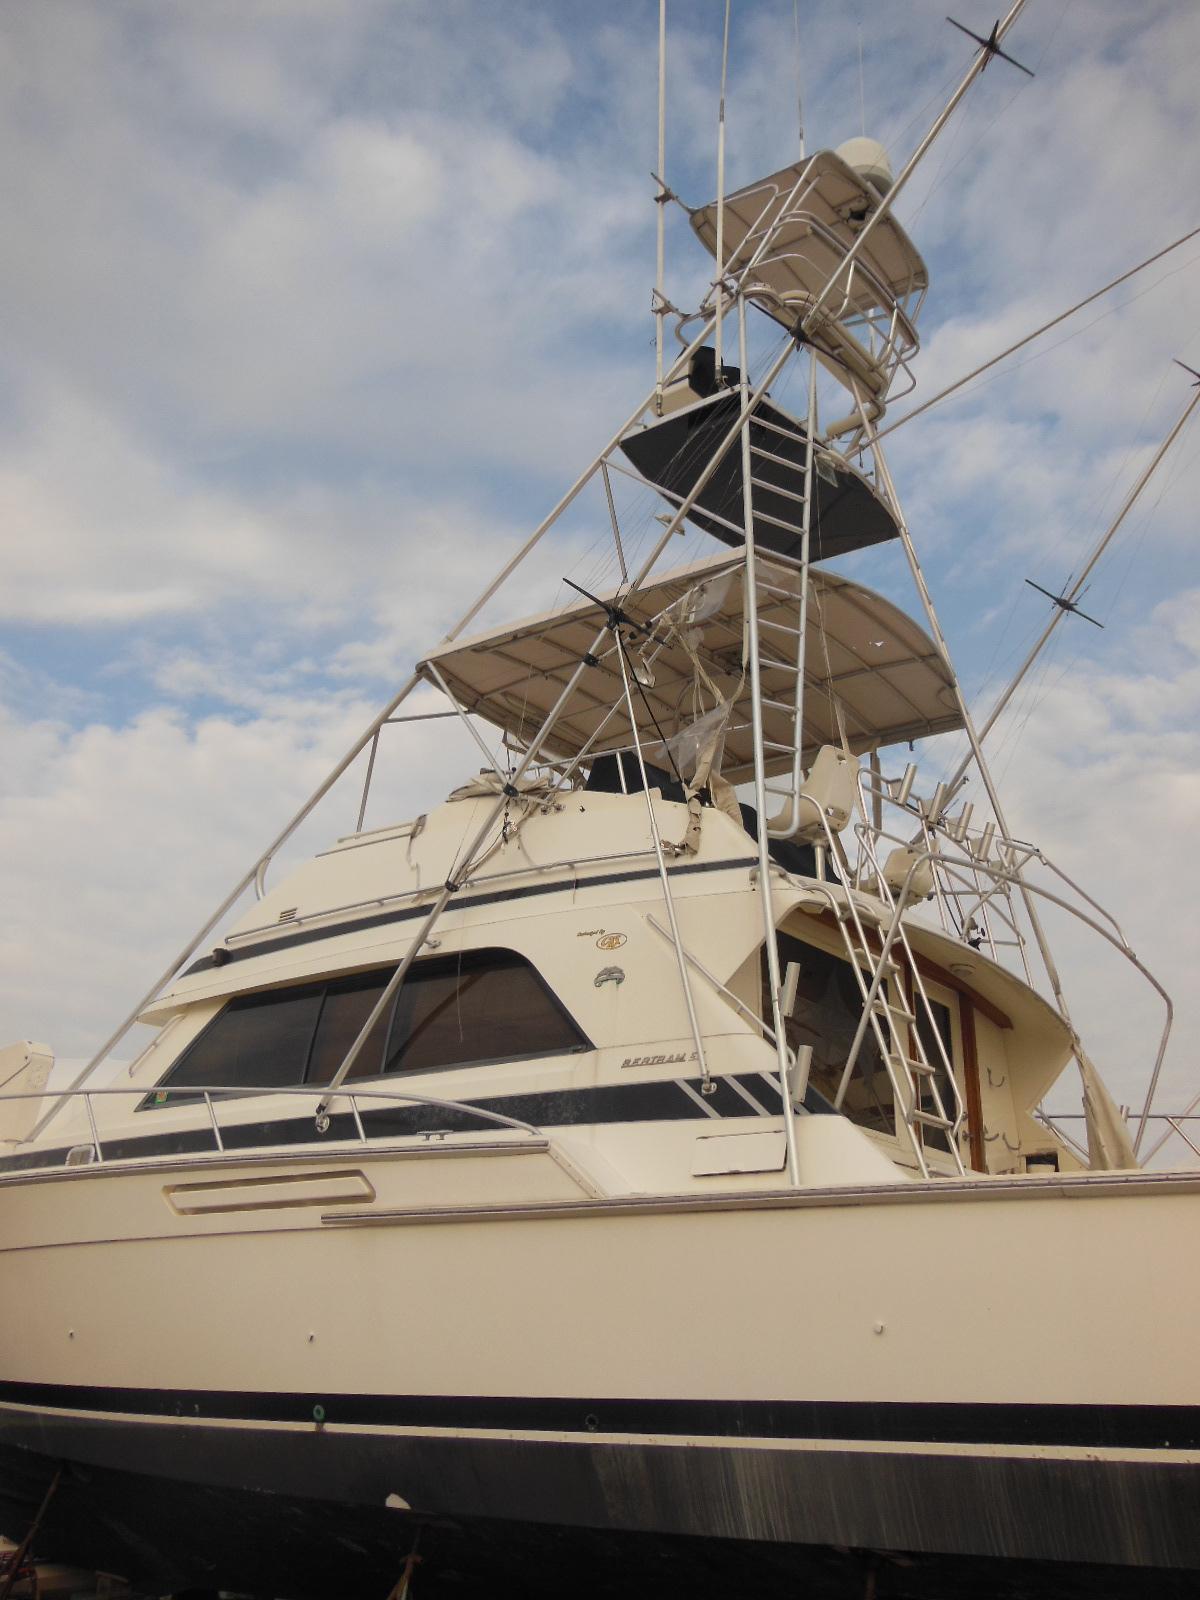 Bertram Hatteras Viking Cay Marine Convertible Sell NOW !!, South Shore L.I.